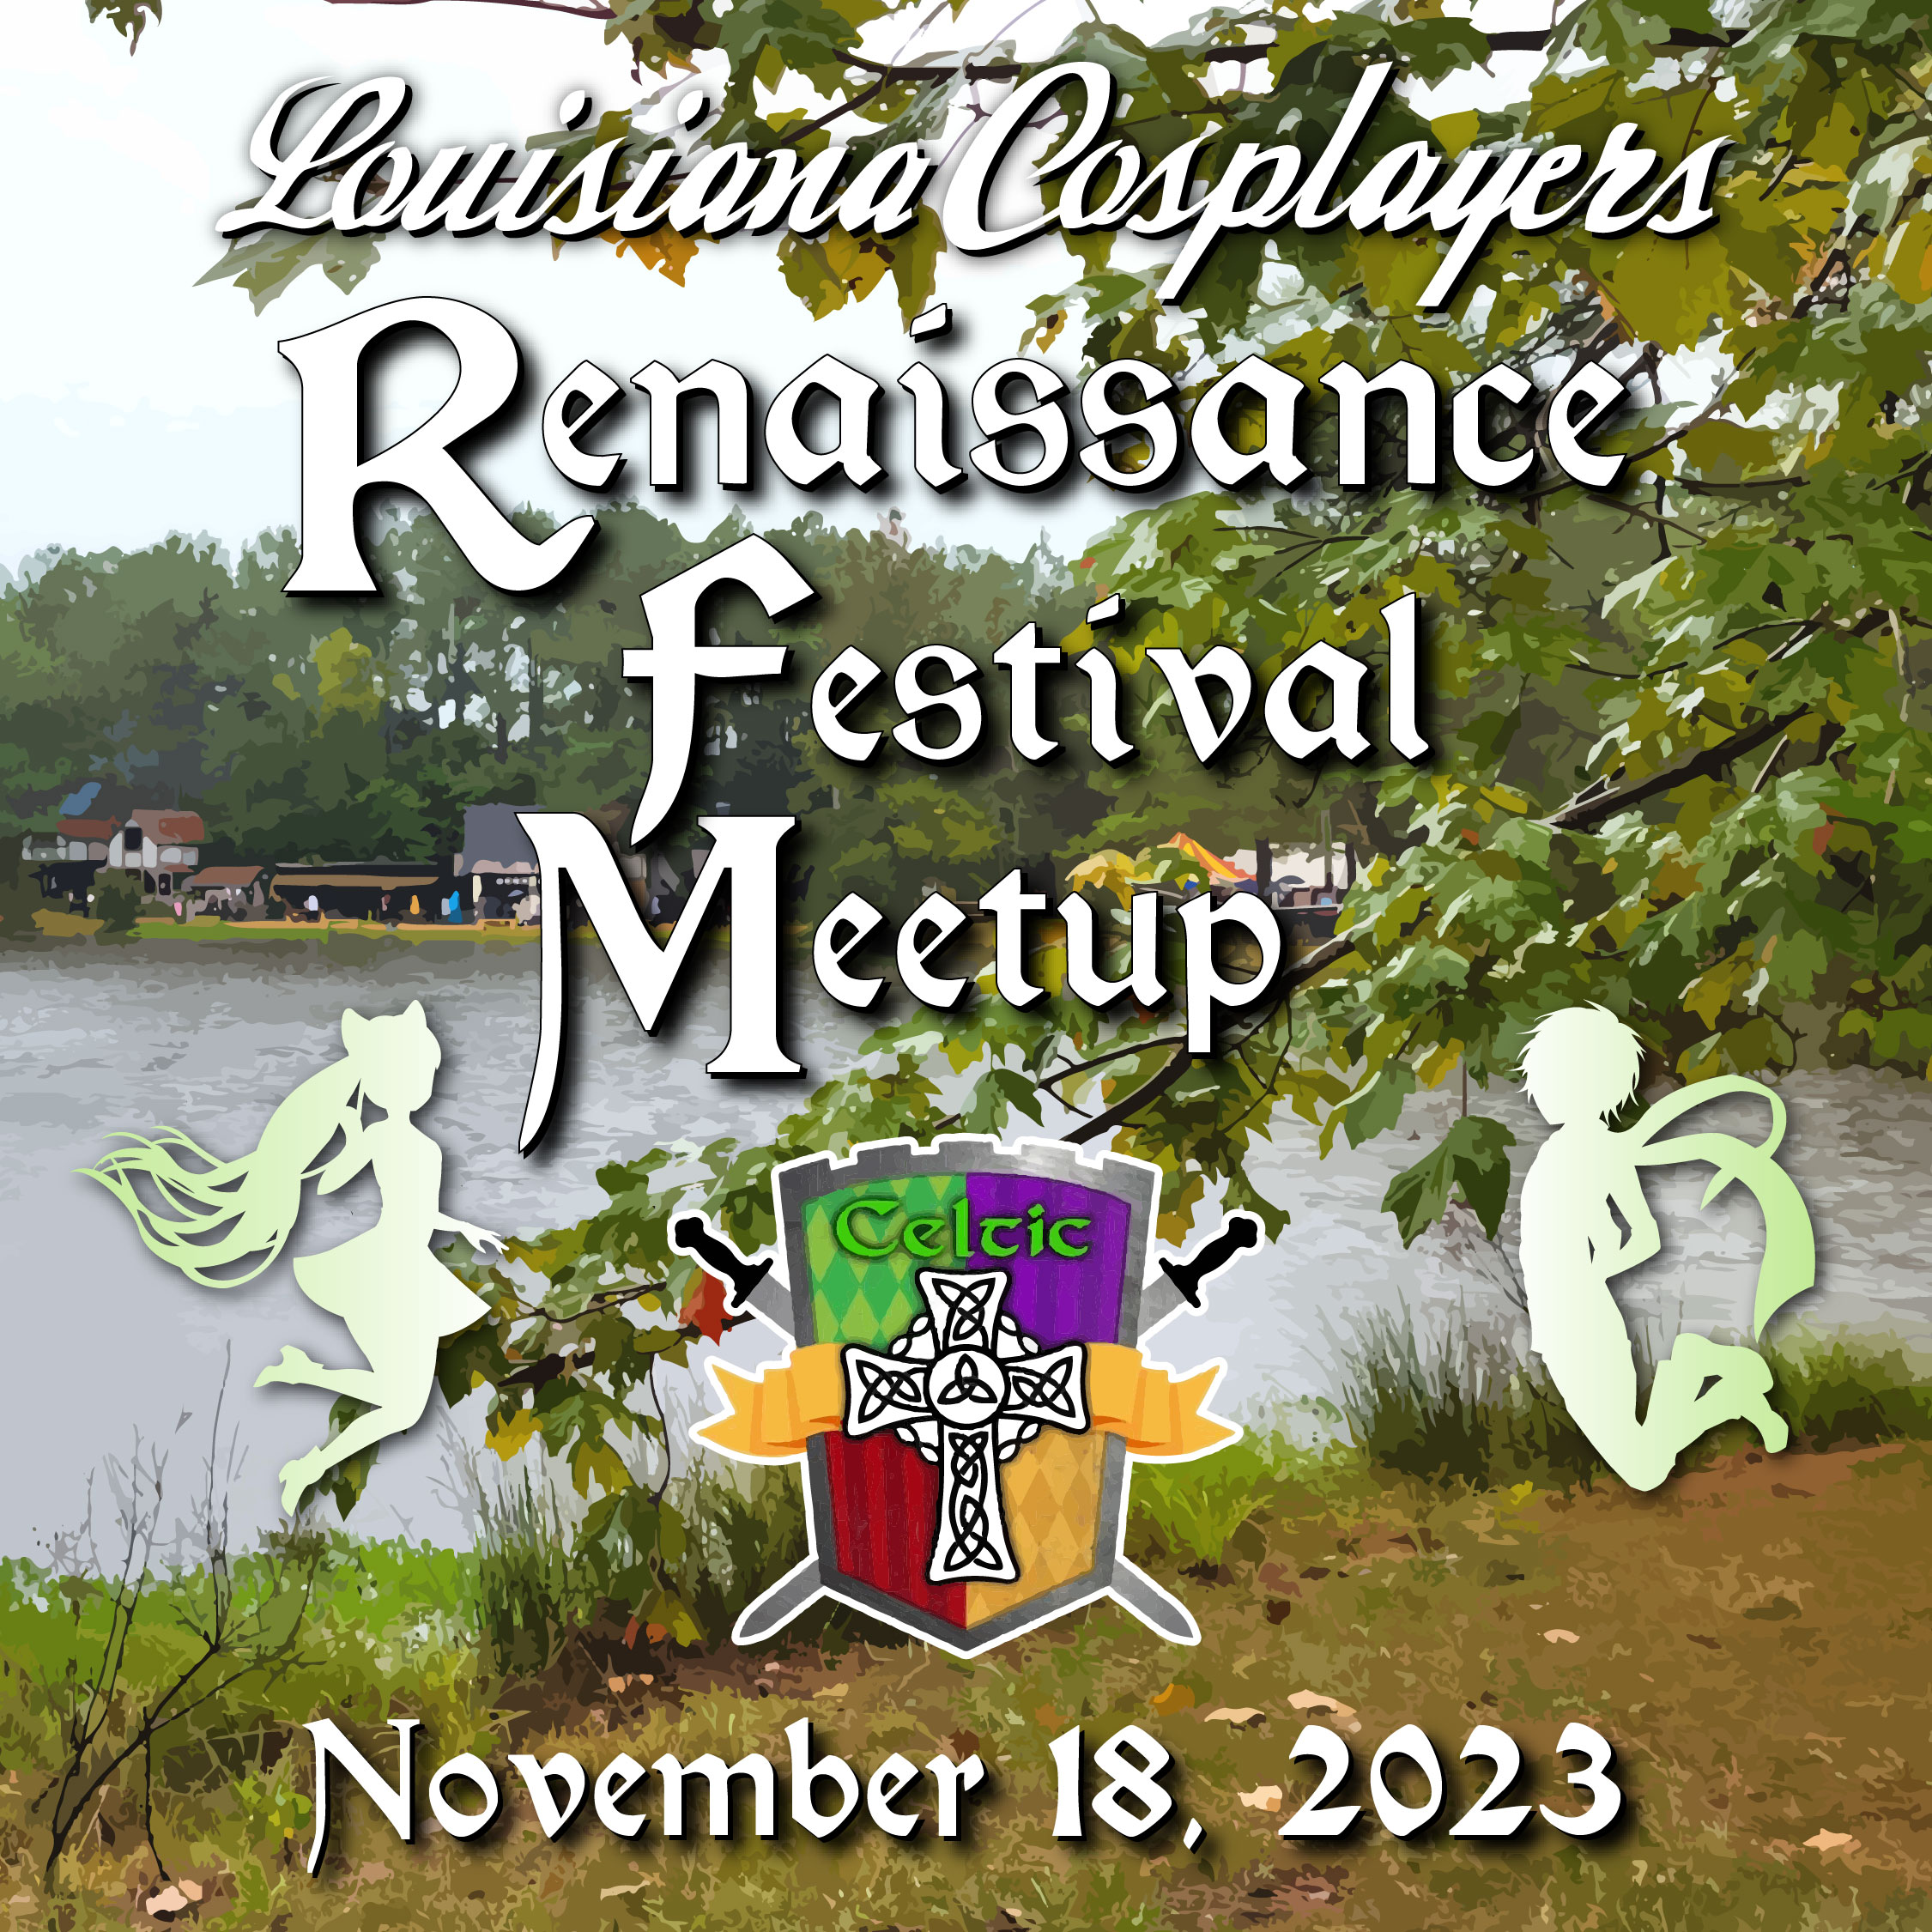 Louisiana Renaissance Festival: Dates, ticket prices, themes